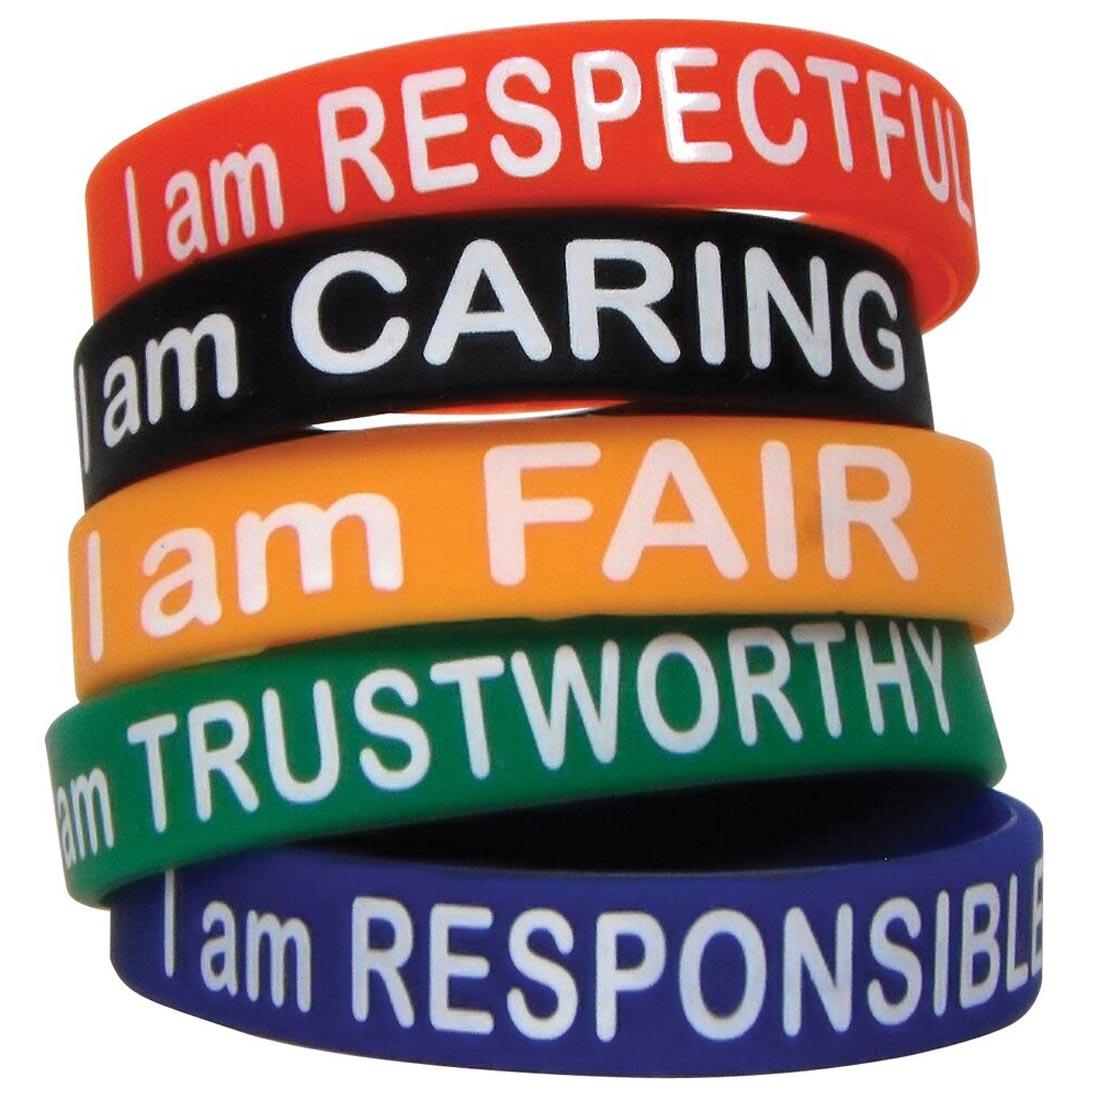 Character Traits Wristbands read I am respectful, caring, fair, trustworthy, responsible